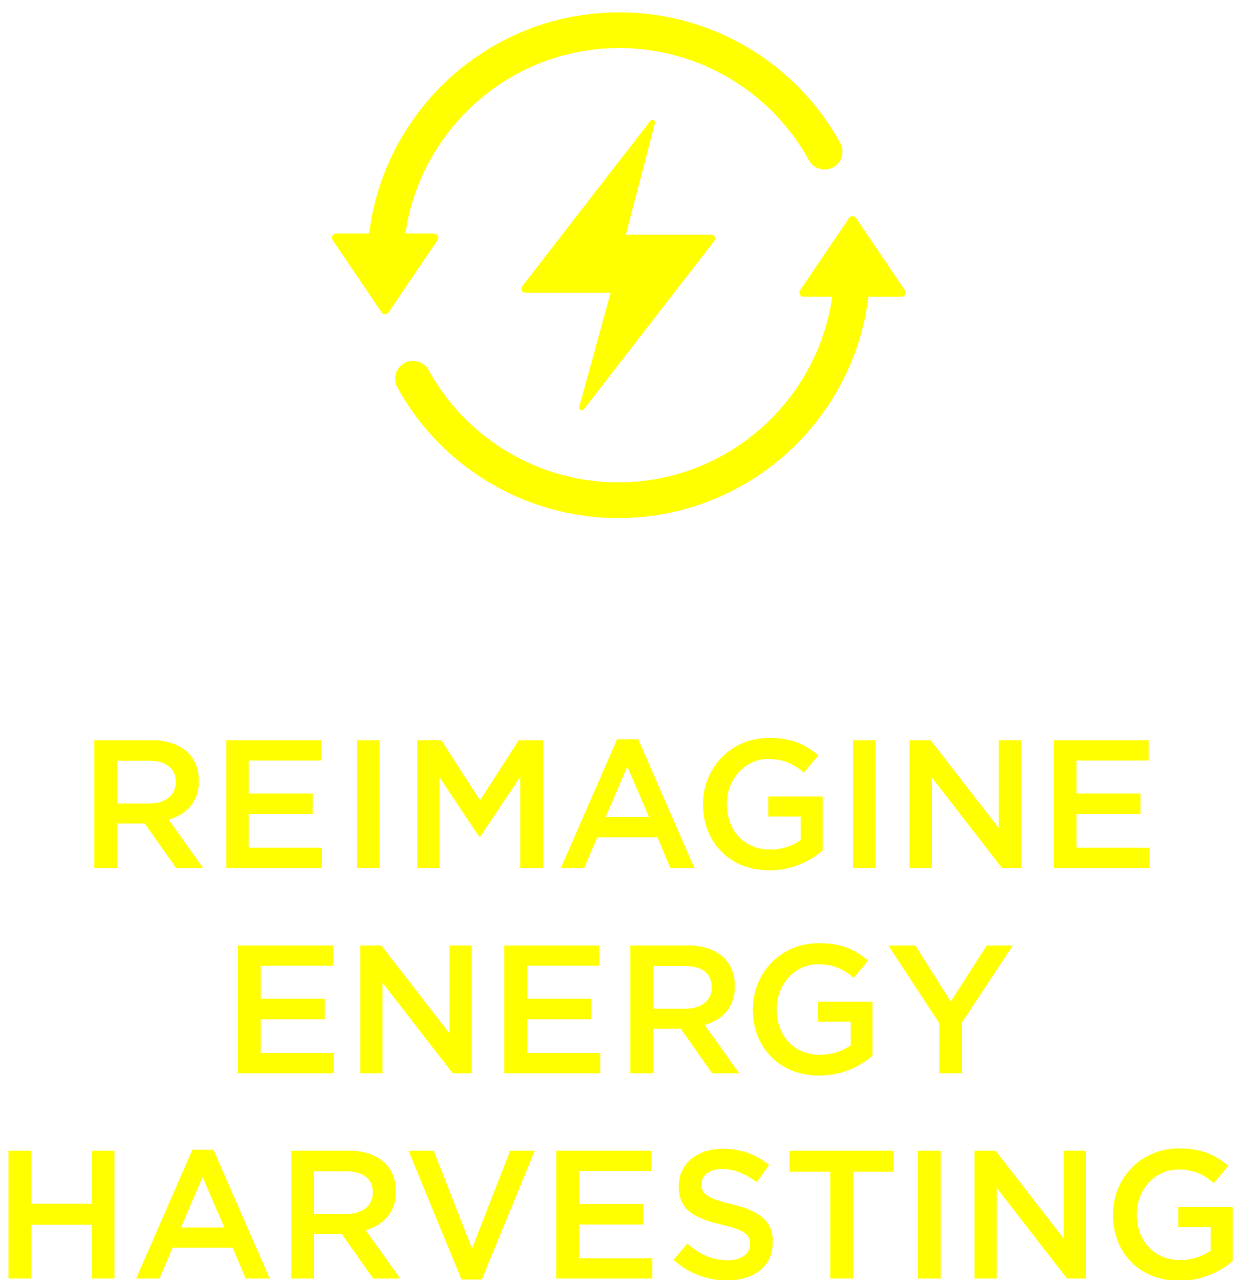 Reimagine energy harvesting!